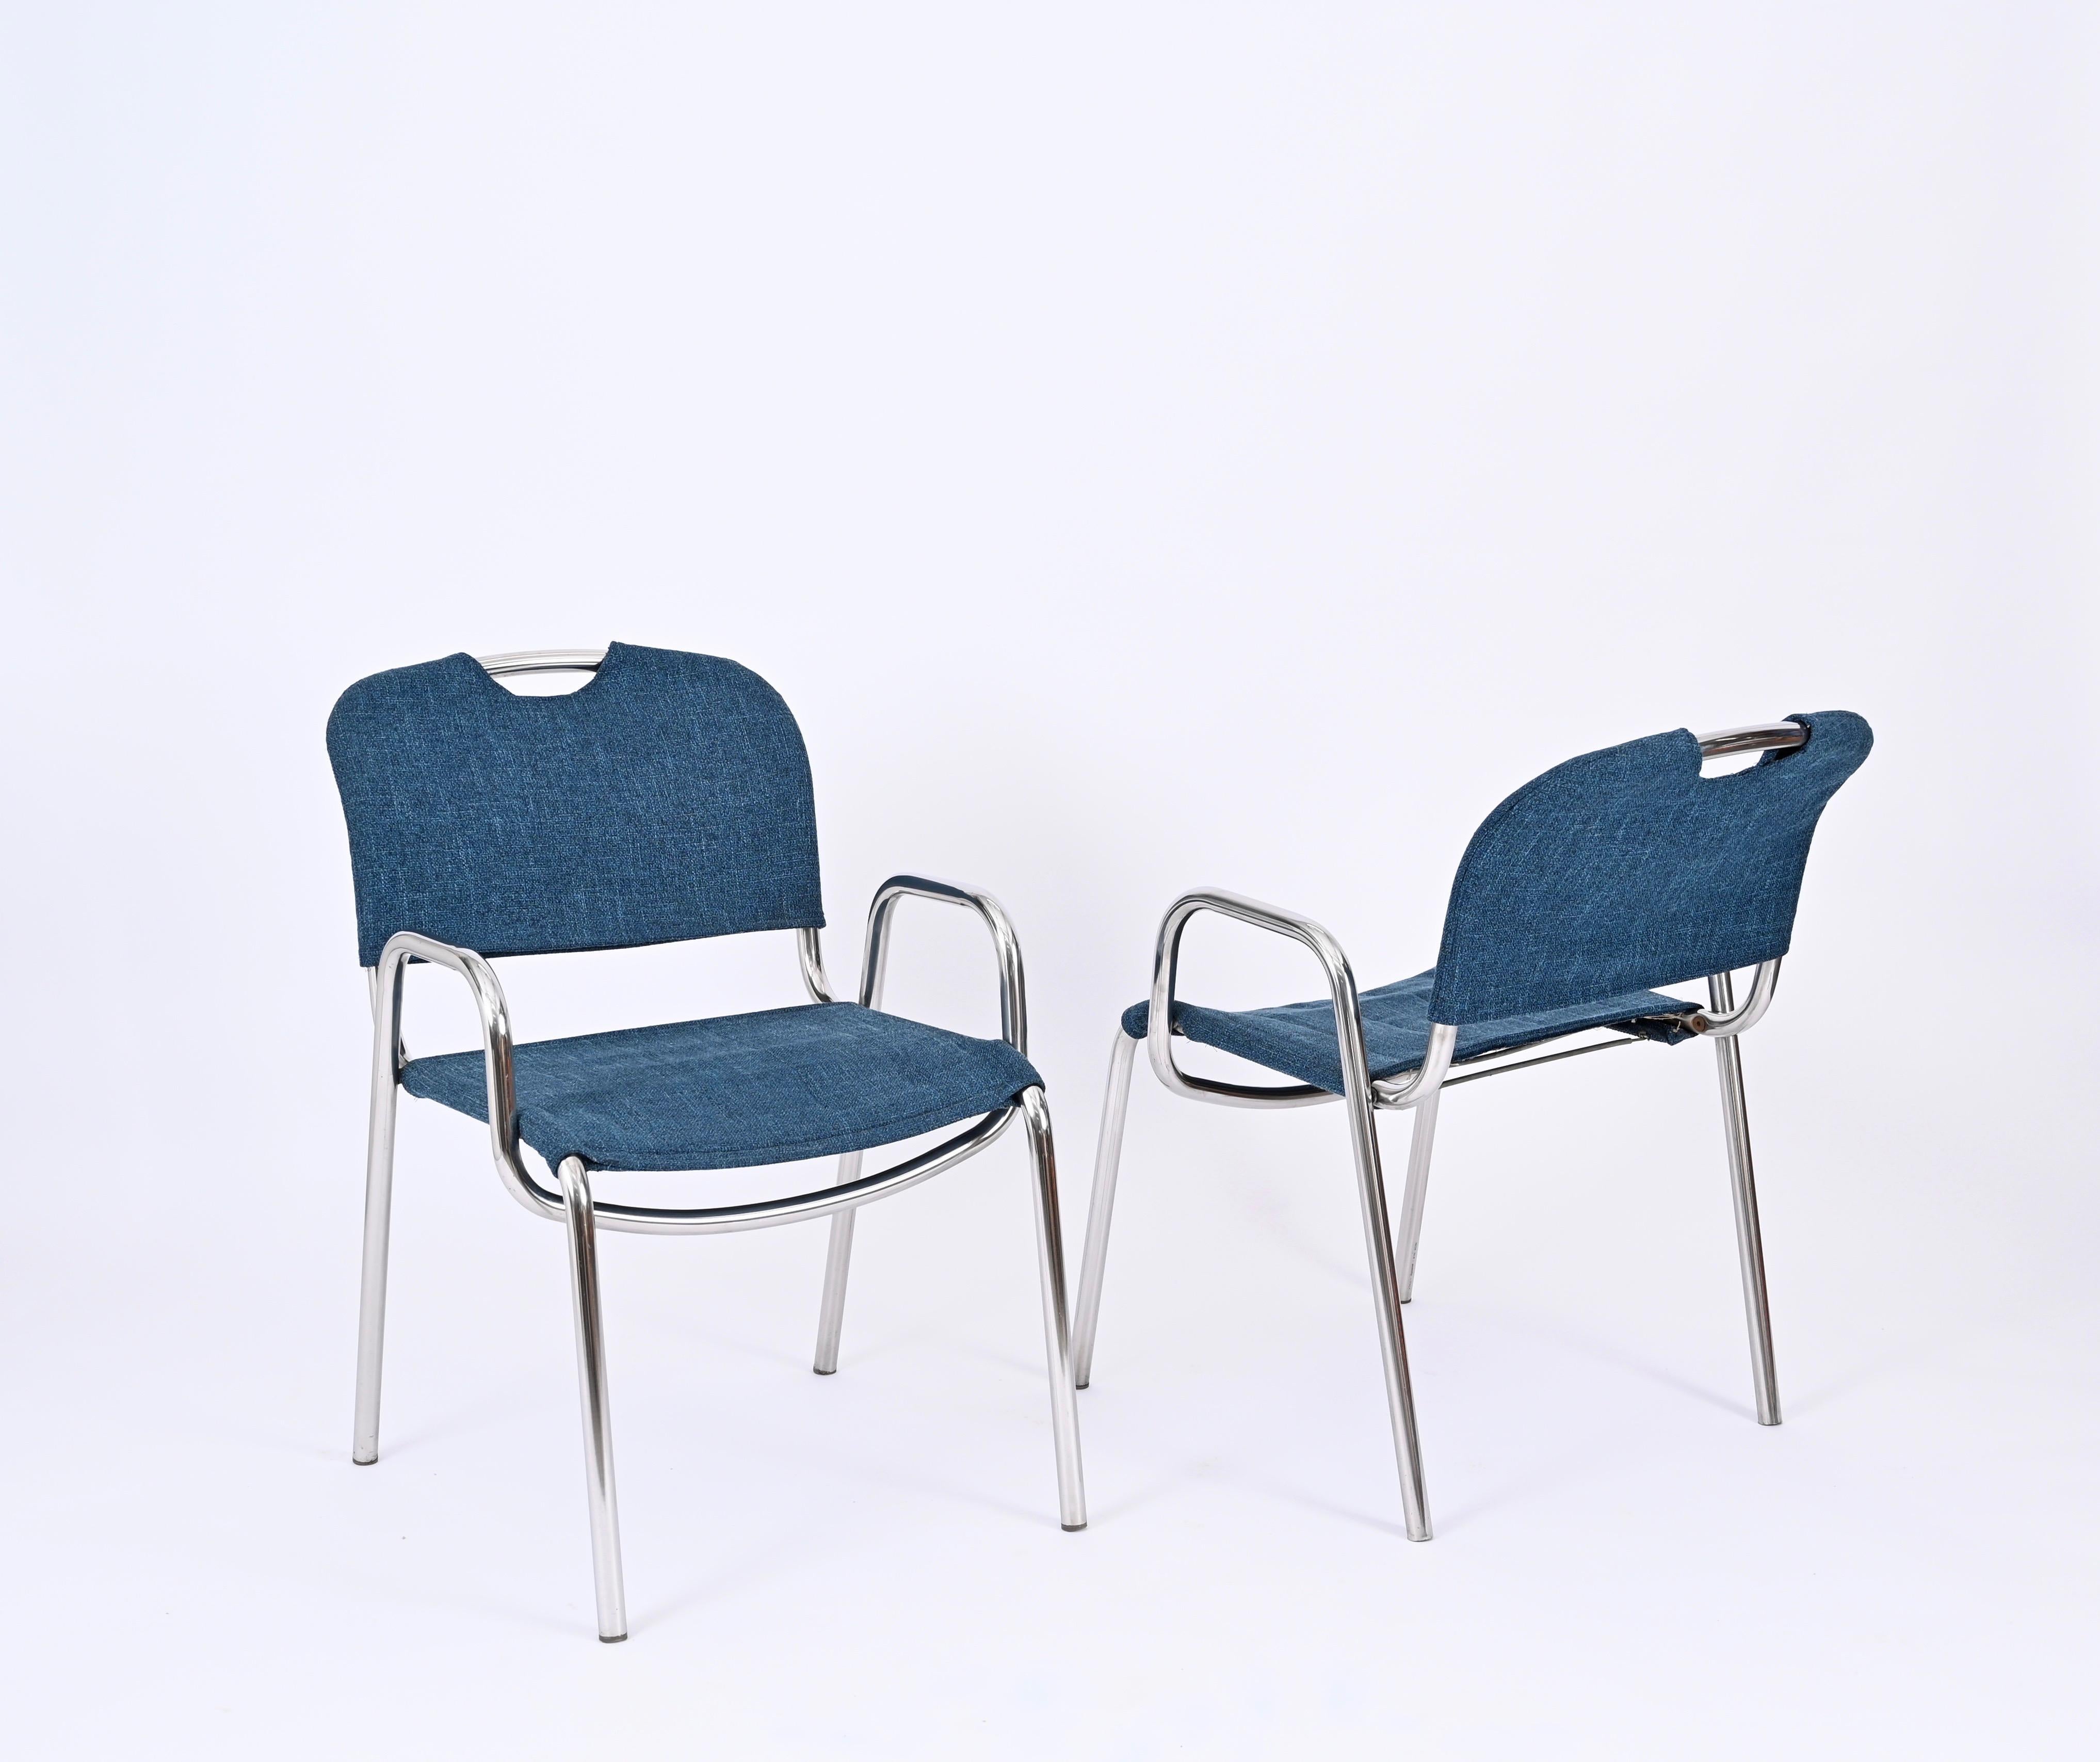 Mid-Century Modern Pair of Blue Castiglietta Dining Chairs by Castiglioni for Zanotta, Italy 1960s For Sale